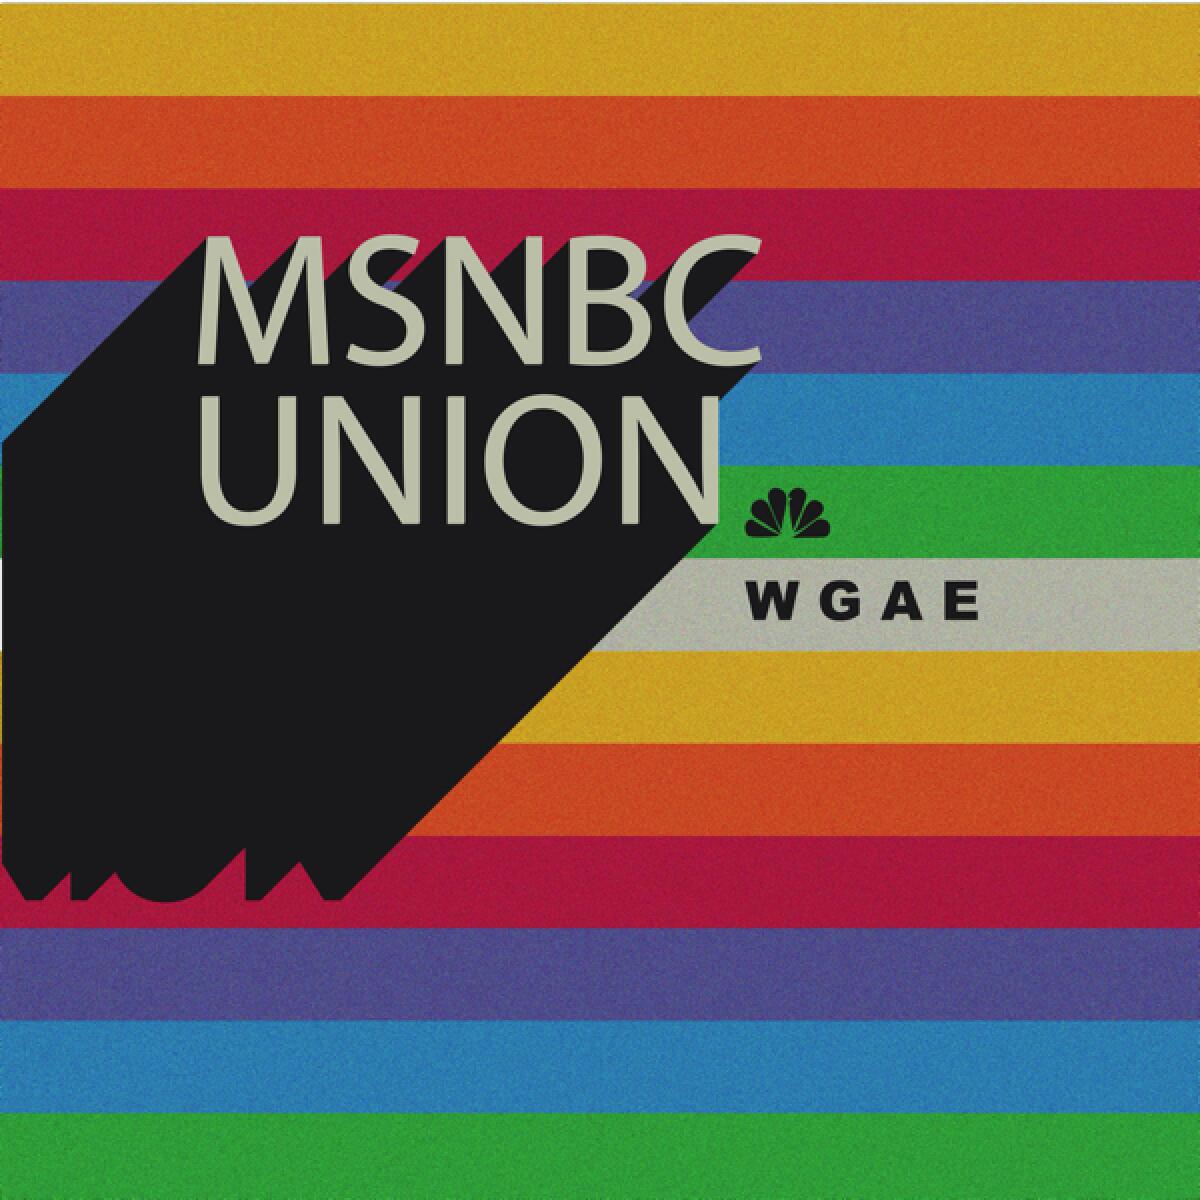 The MSNBC Union logo